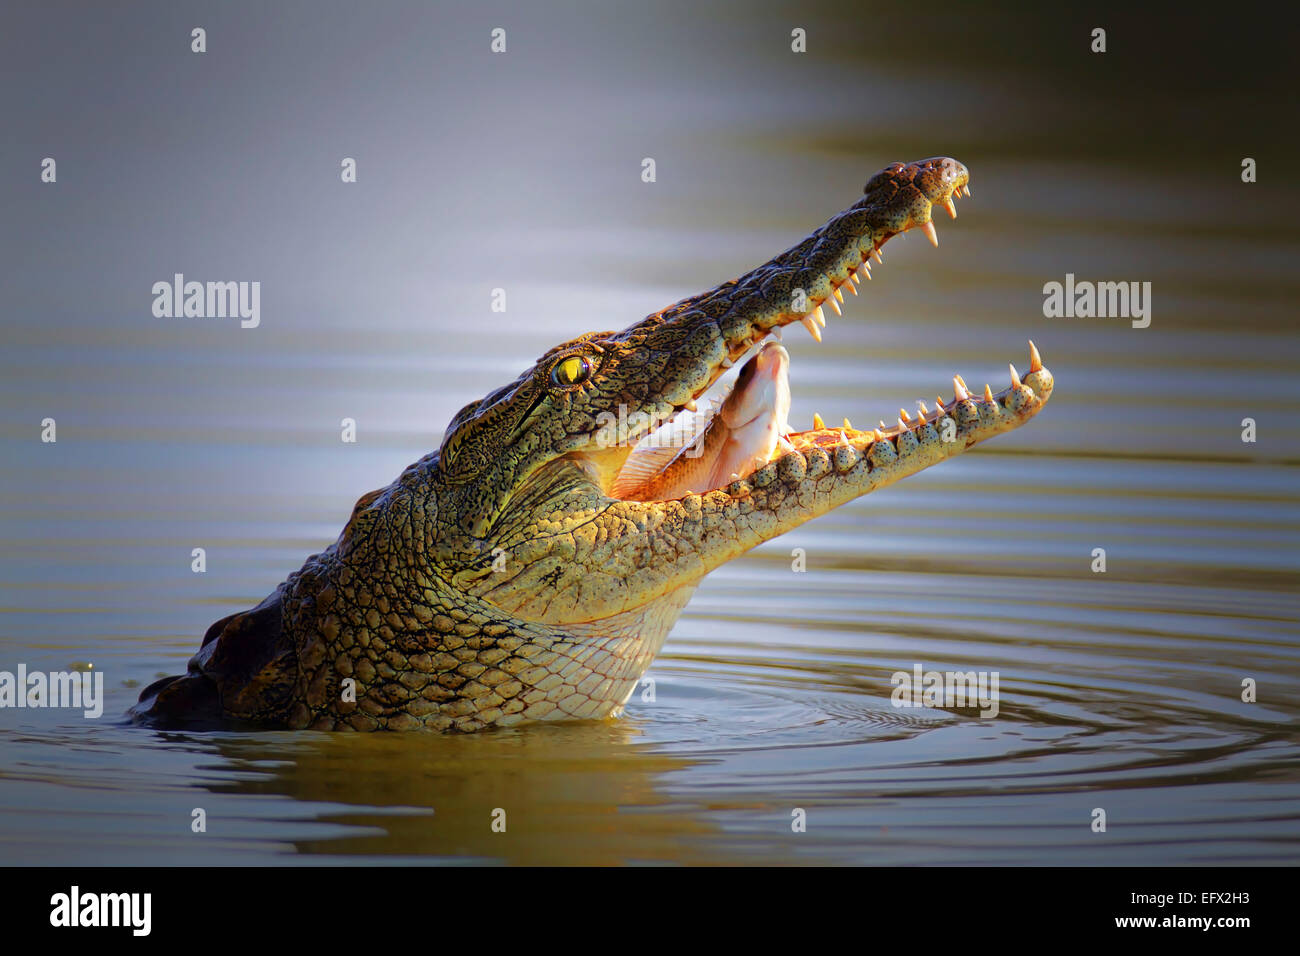 Nile crocodile swallowing a fish; crocodylus niloticus - Kruger National Park Stock Photo